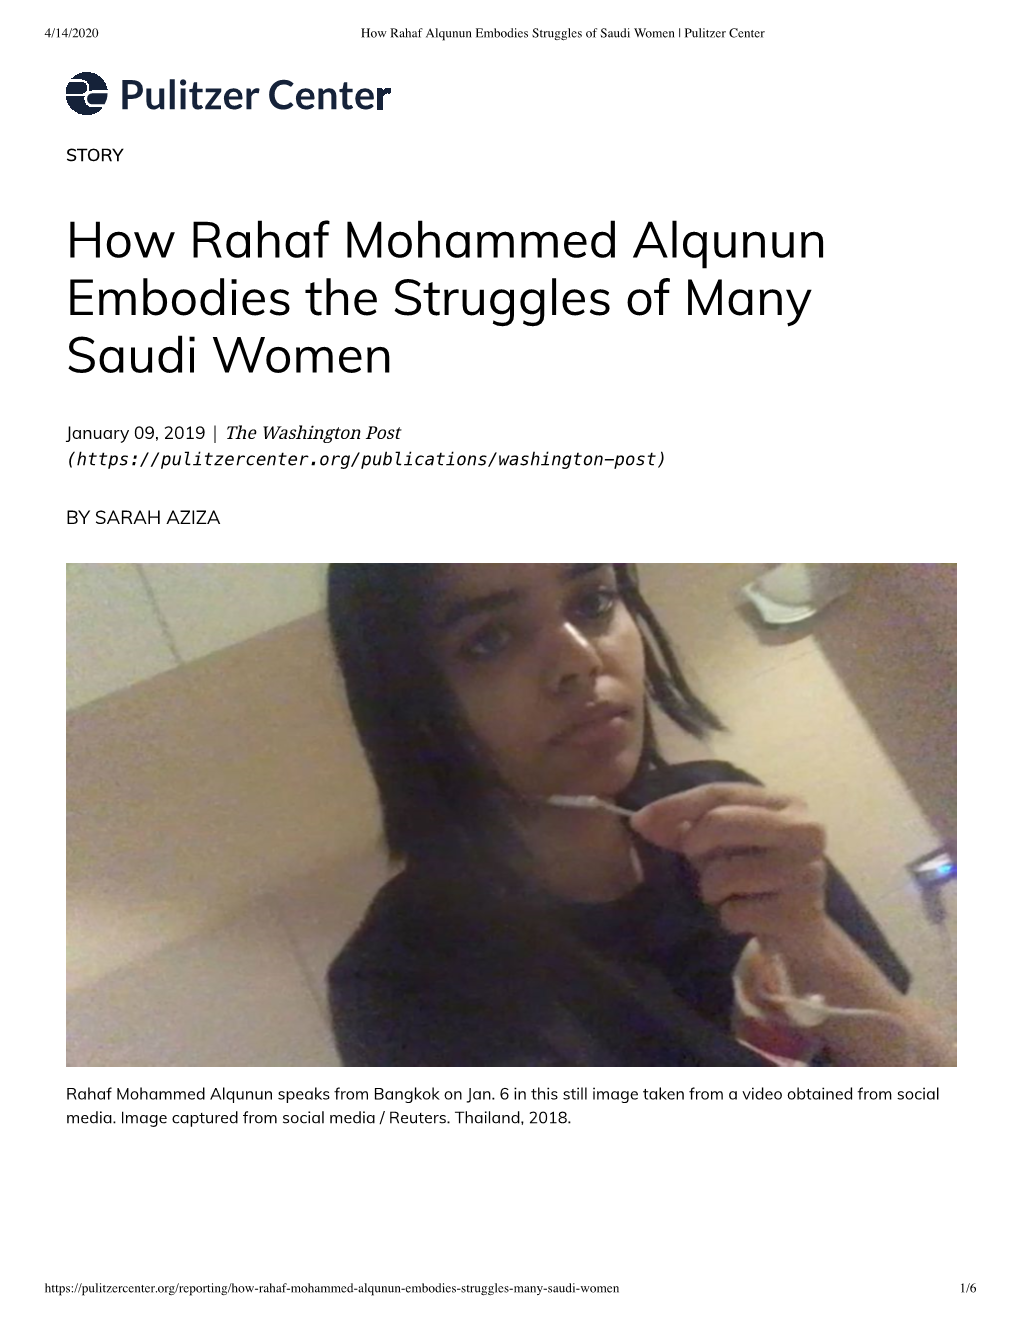 Rahaf Mohammed Alqunun Embodies the Struggles of Many Saudi Women